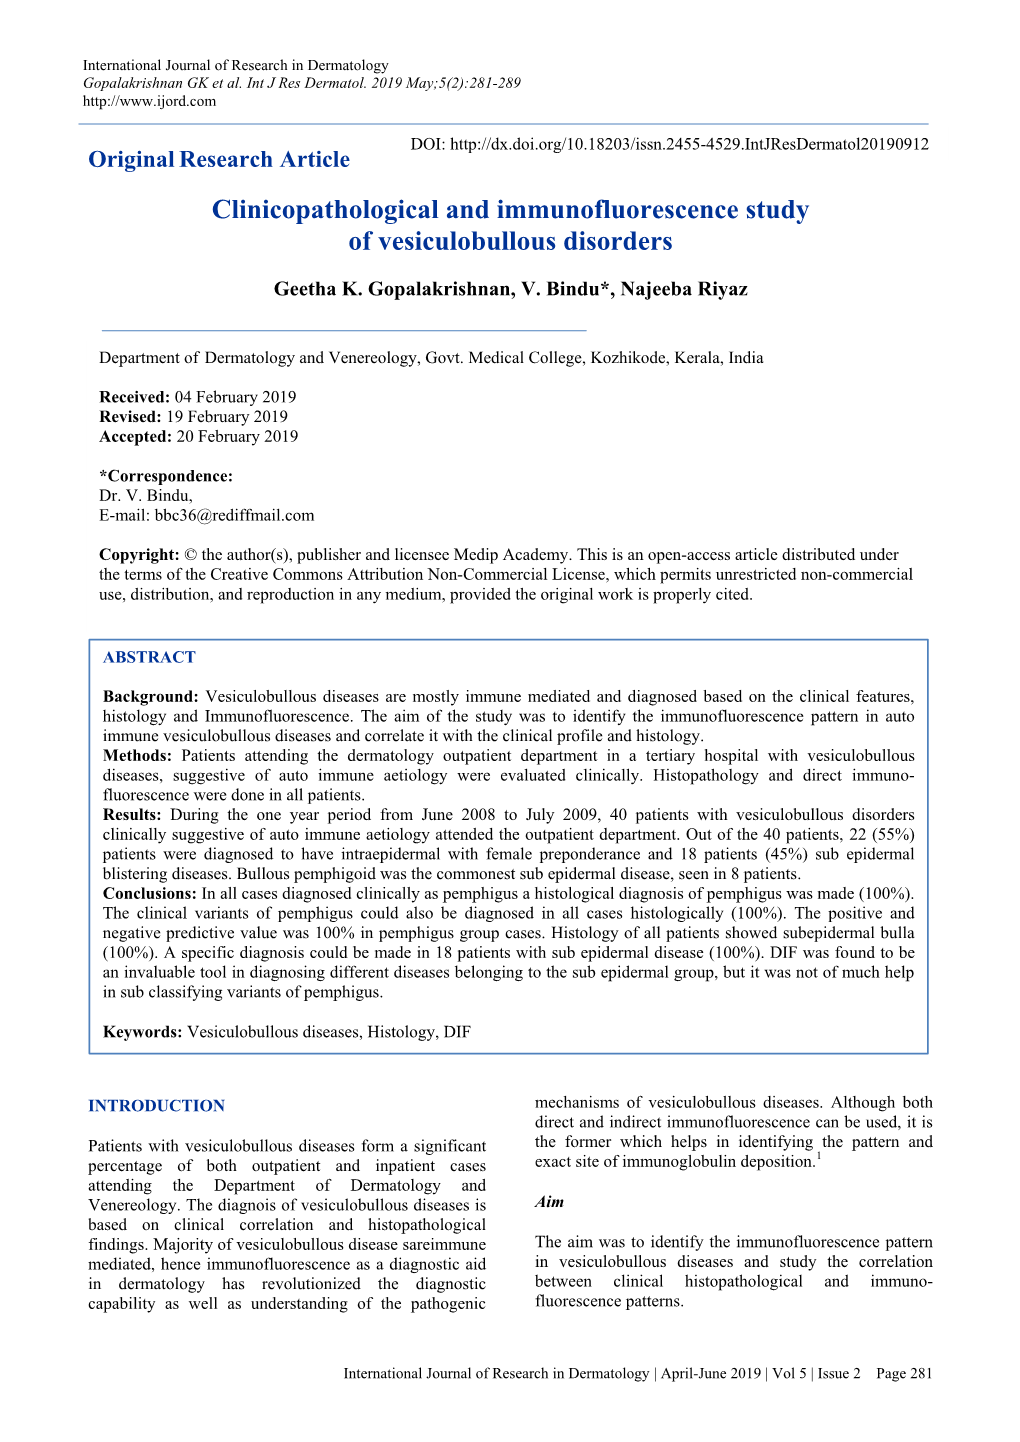 Clinicopathological and Immunofluorescence Study of Vesiculobullous Disorders